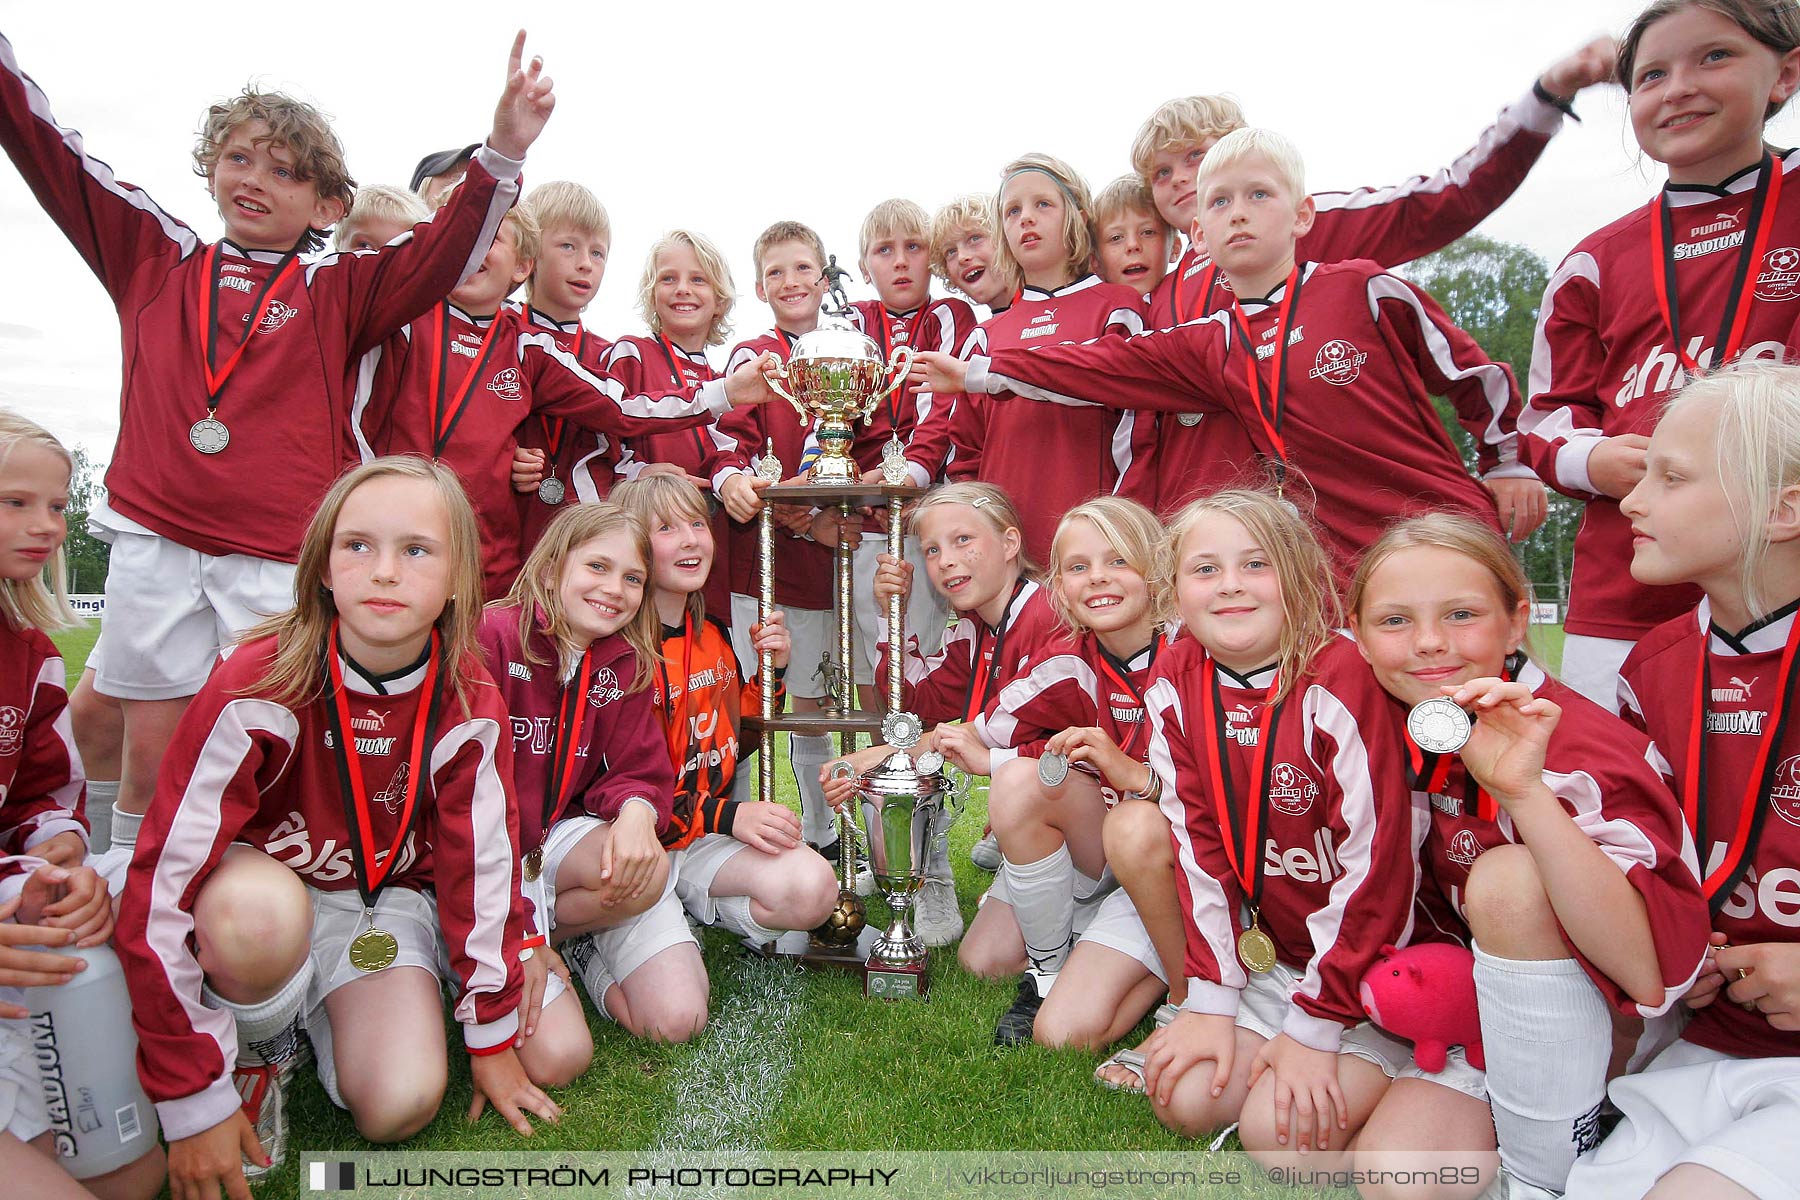 Ulvacupen 2006,mix,Åbrovallen,Ulvåker,Sverige,Fotboll,,2006,147508